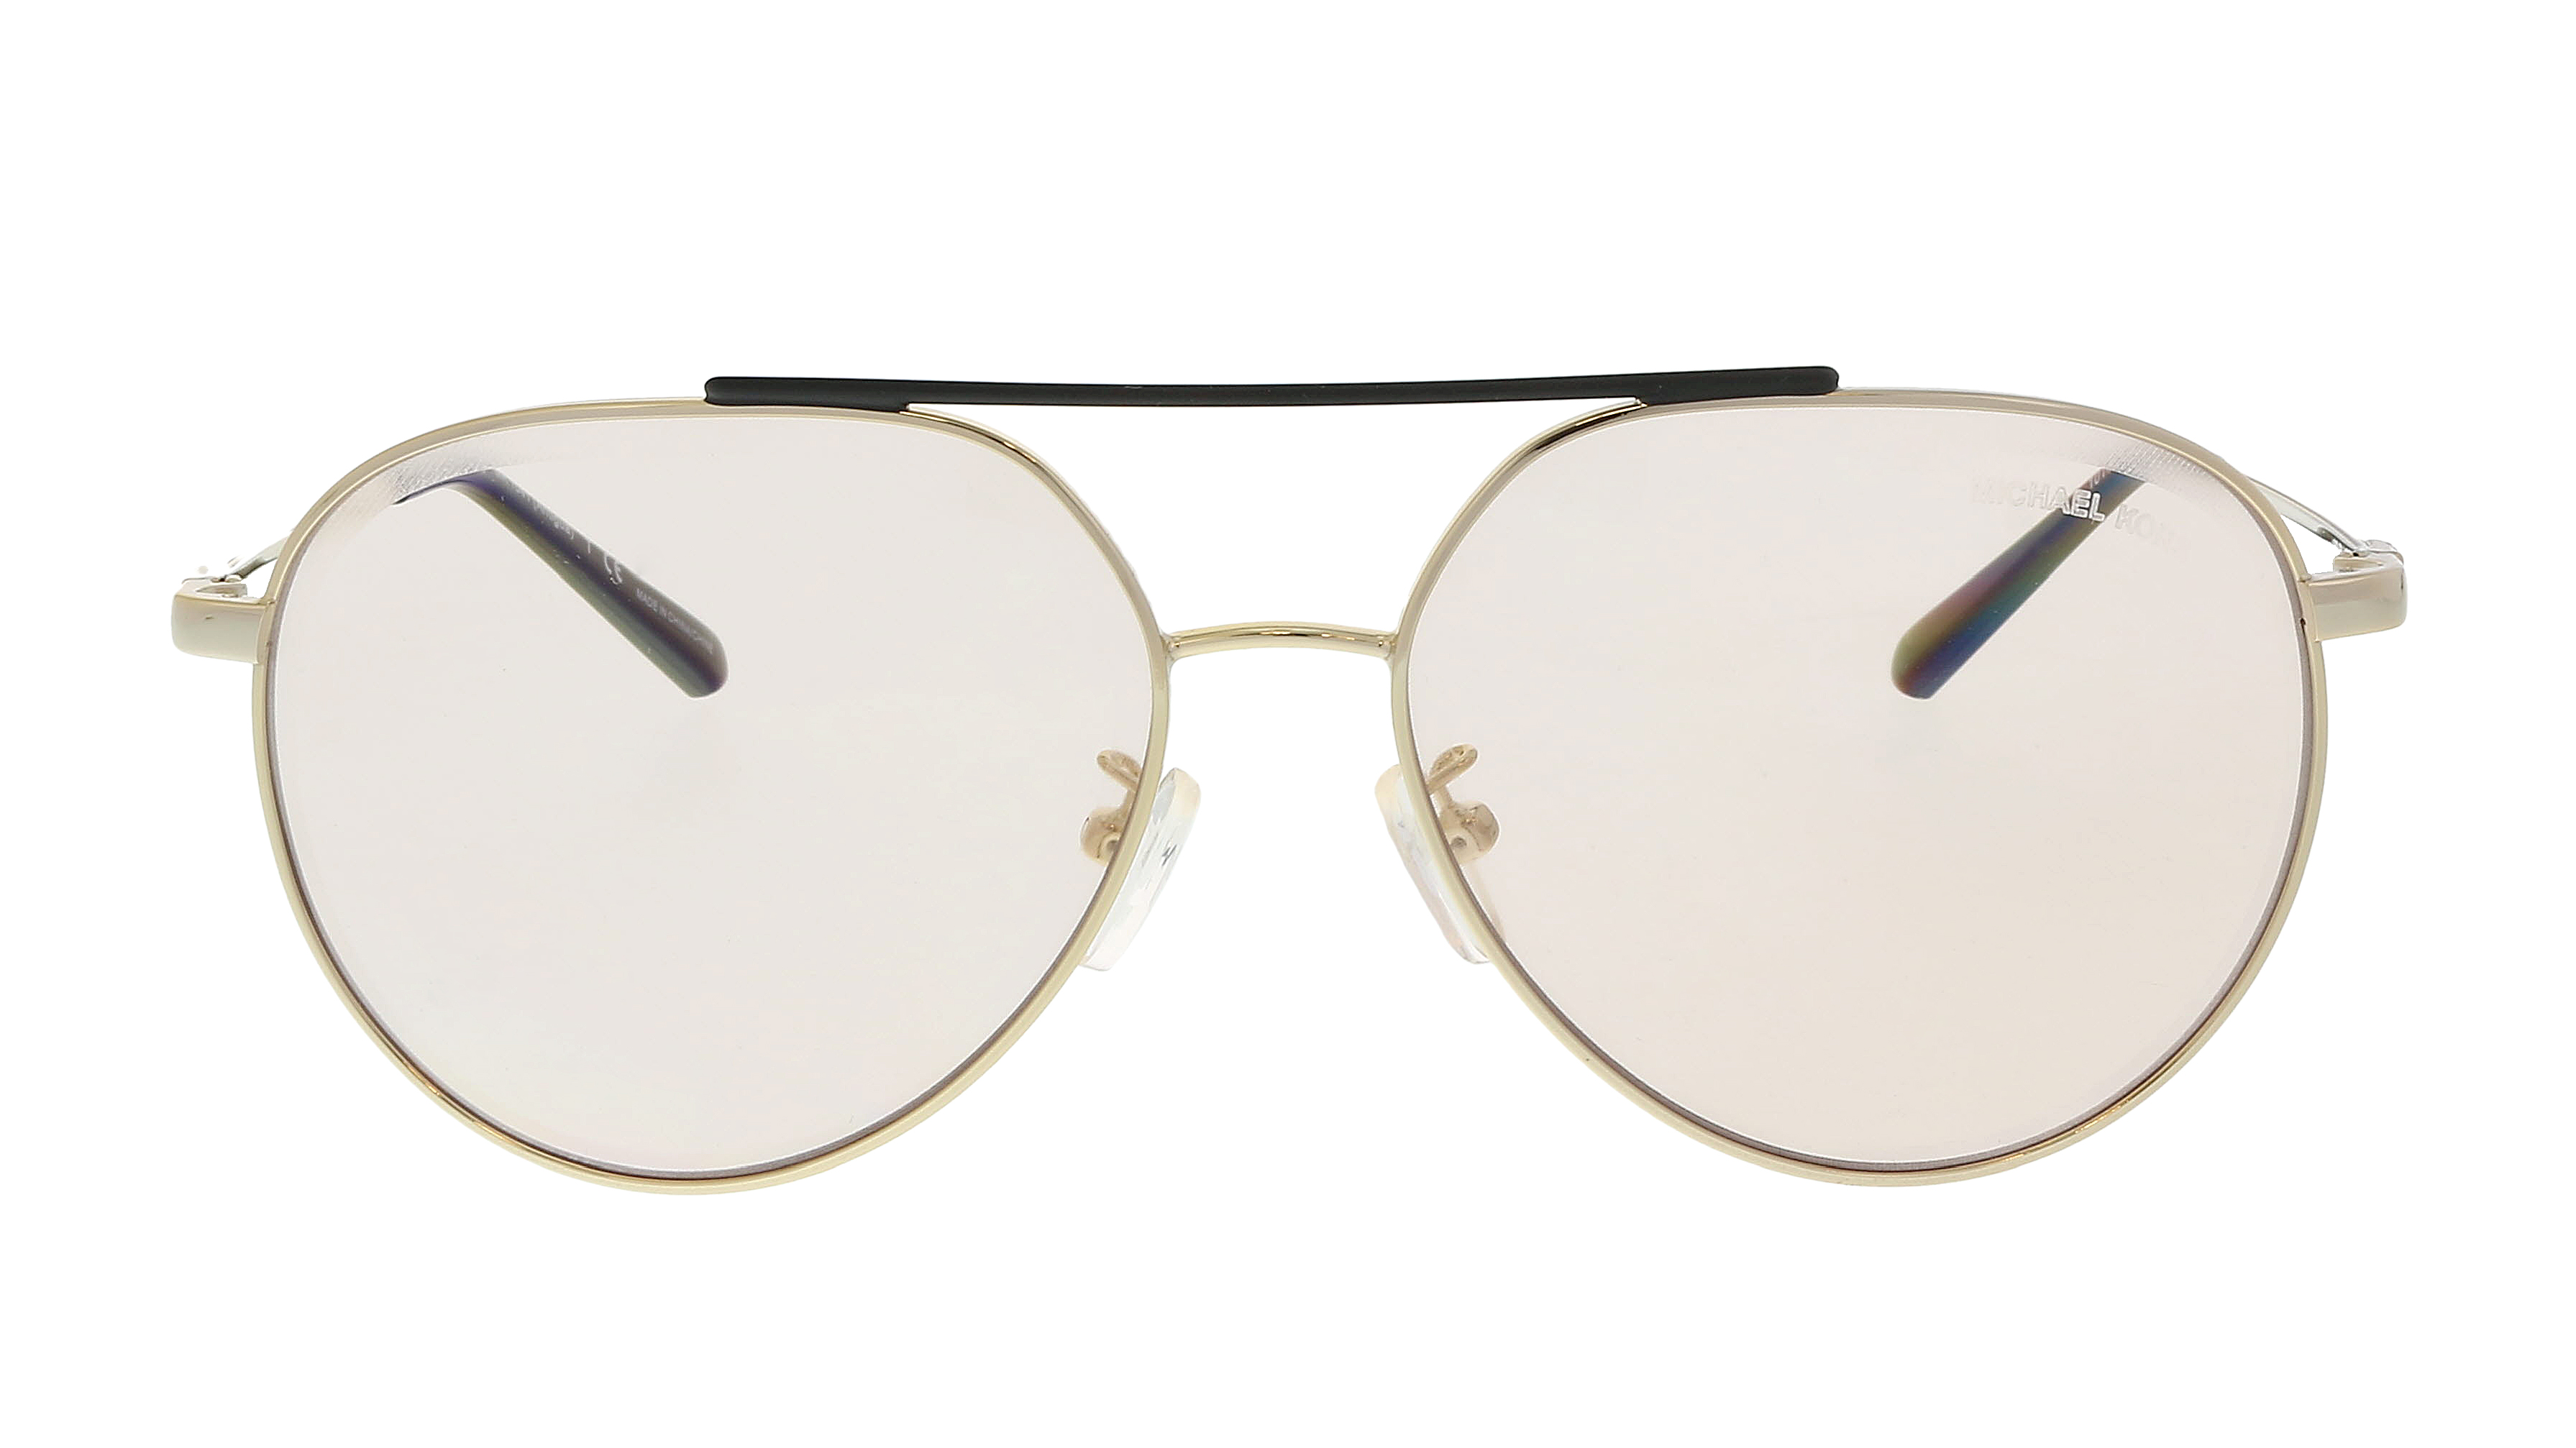 Michael Kors ANTIGUA MK1041 Sunglasses 101473-60 - Men's, Shiny Pale Gold Frame, MK1041-101473-60 - image 2 of 5